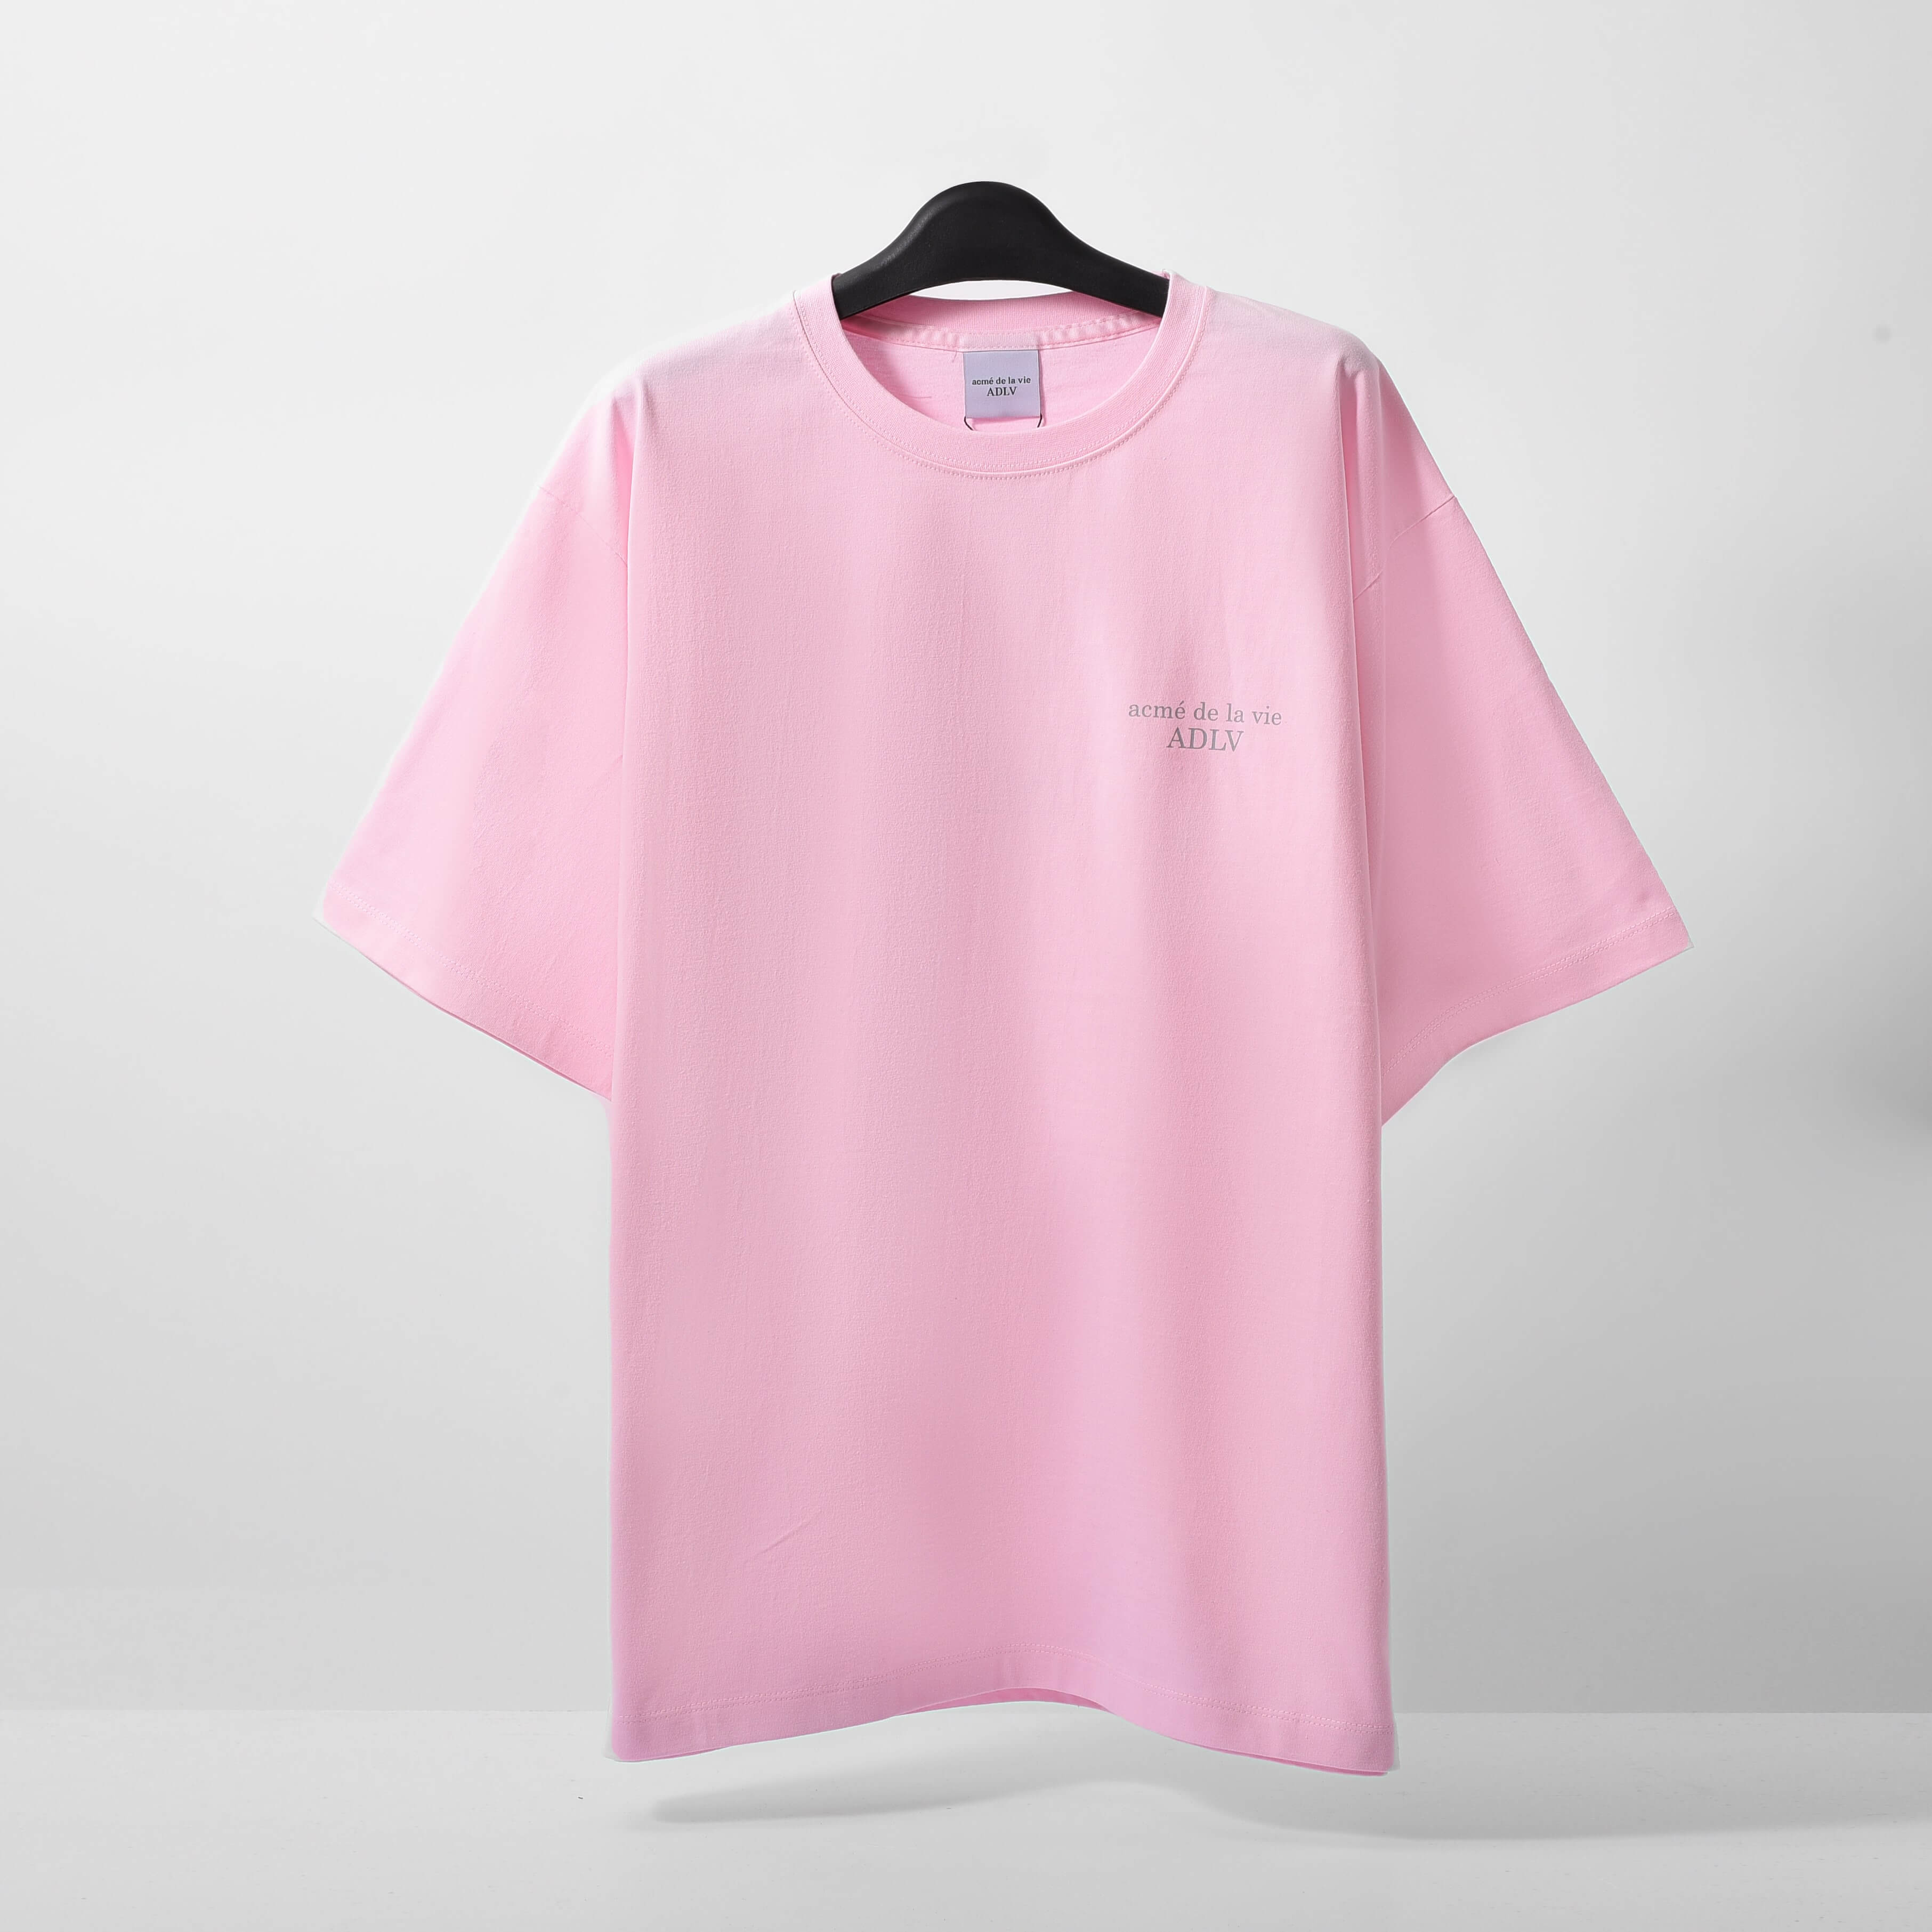 ADLV Basic Tshirt - Pink